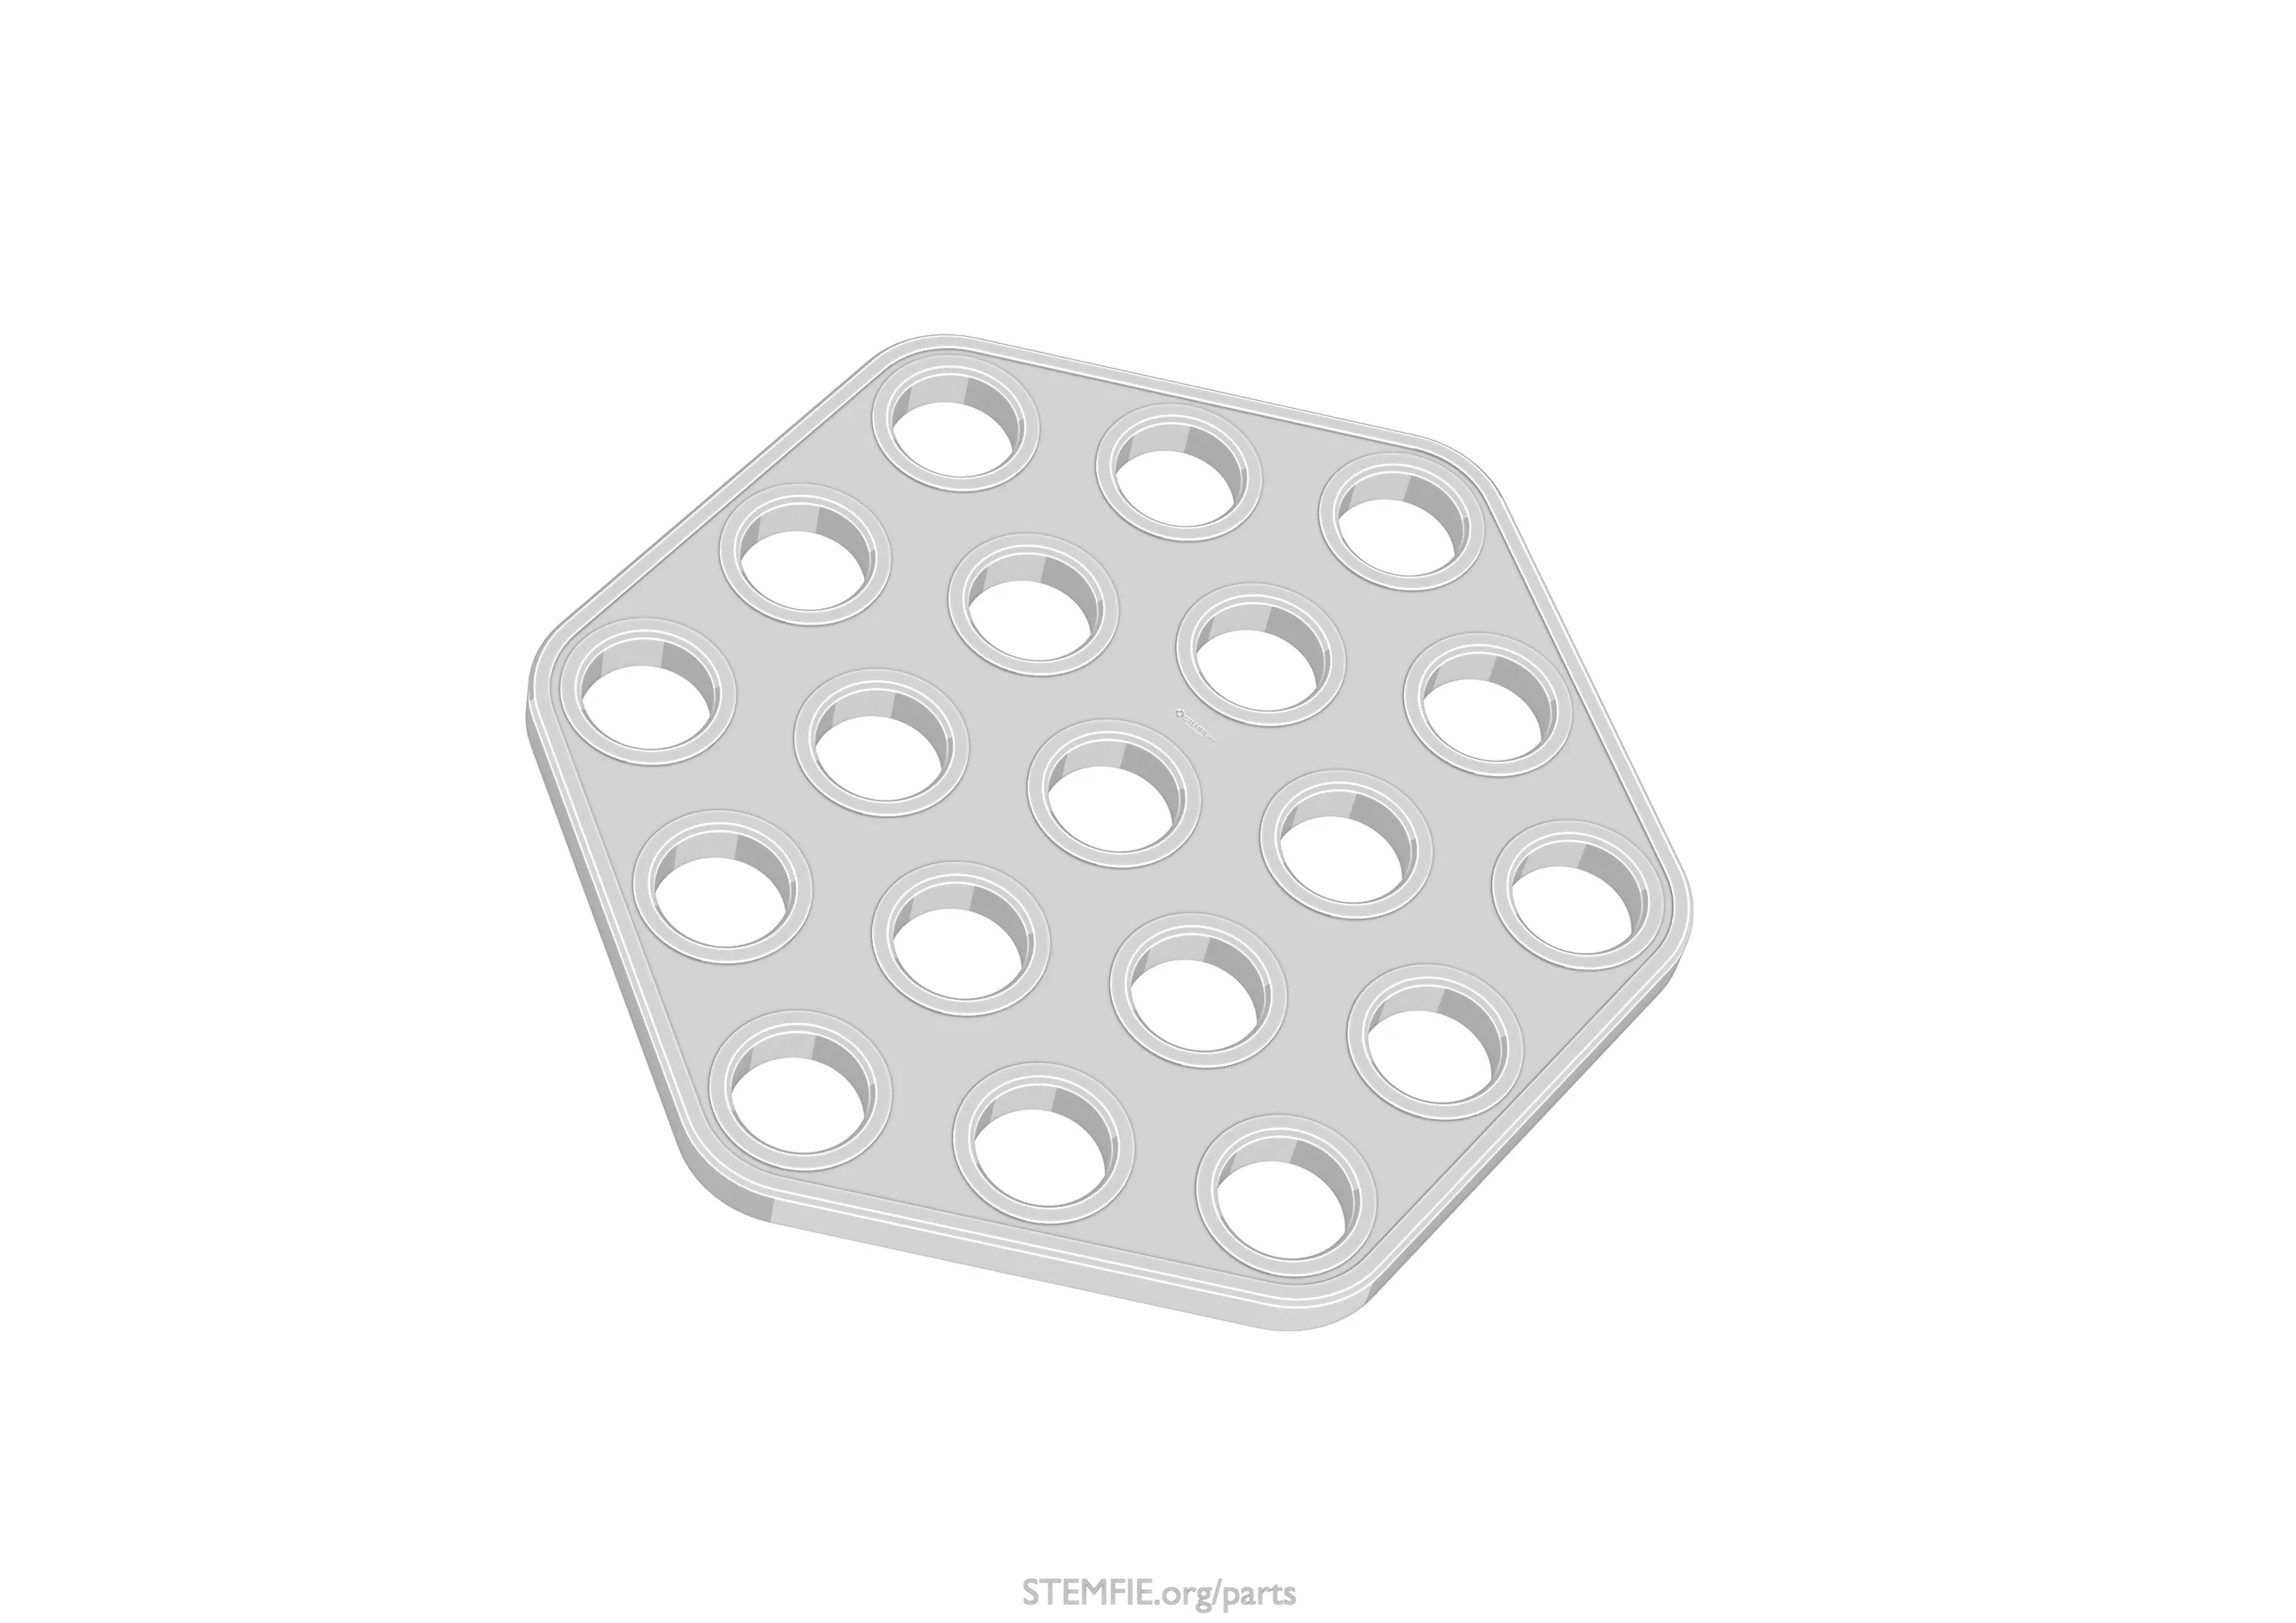 STEMFIE - Parts - Plates - 6-Hexagonal